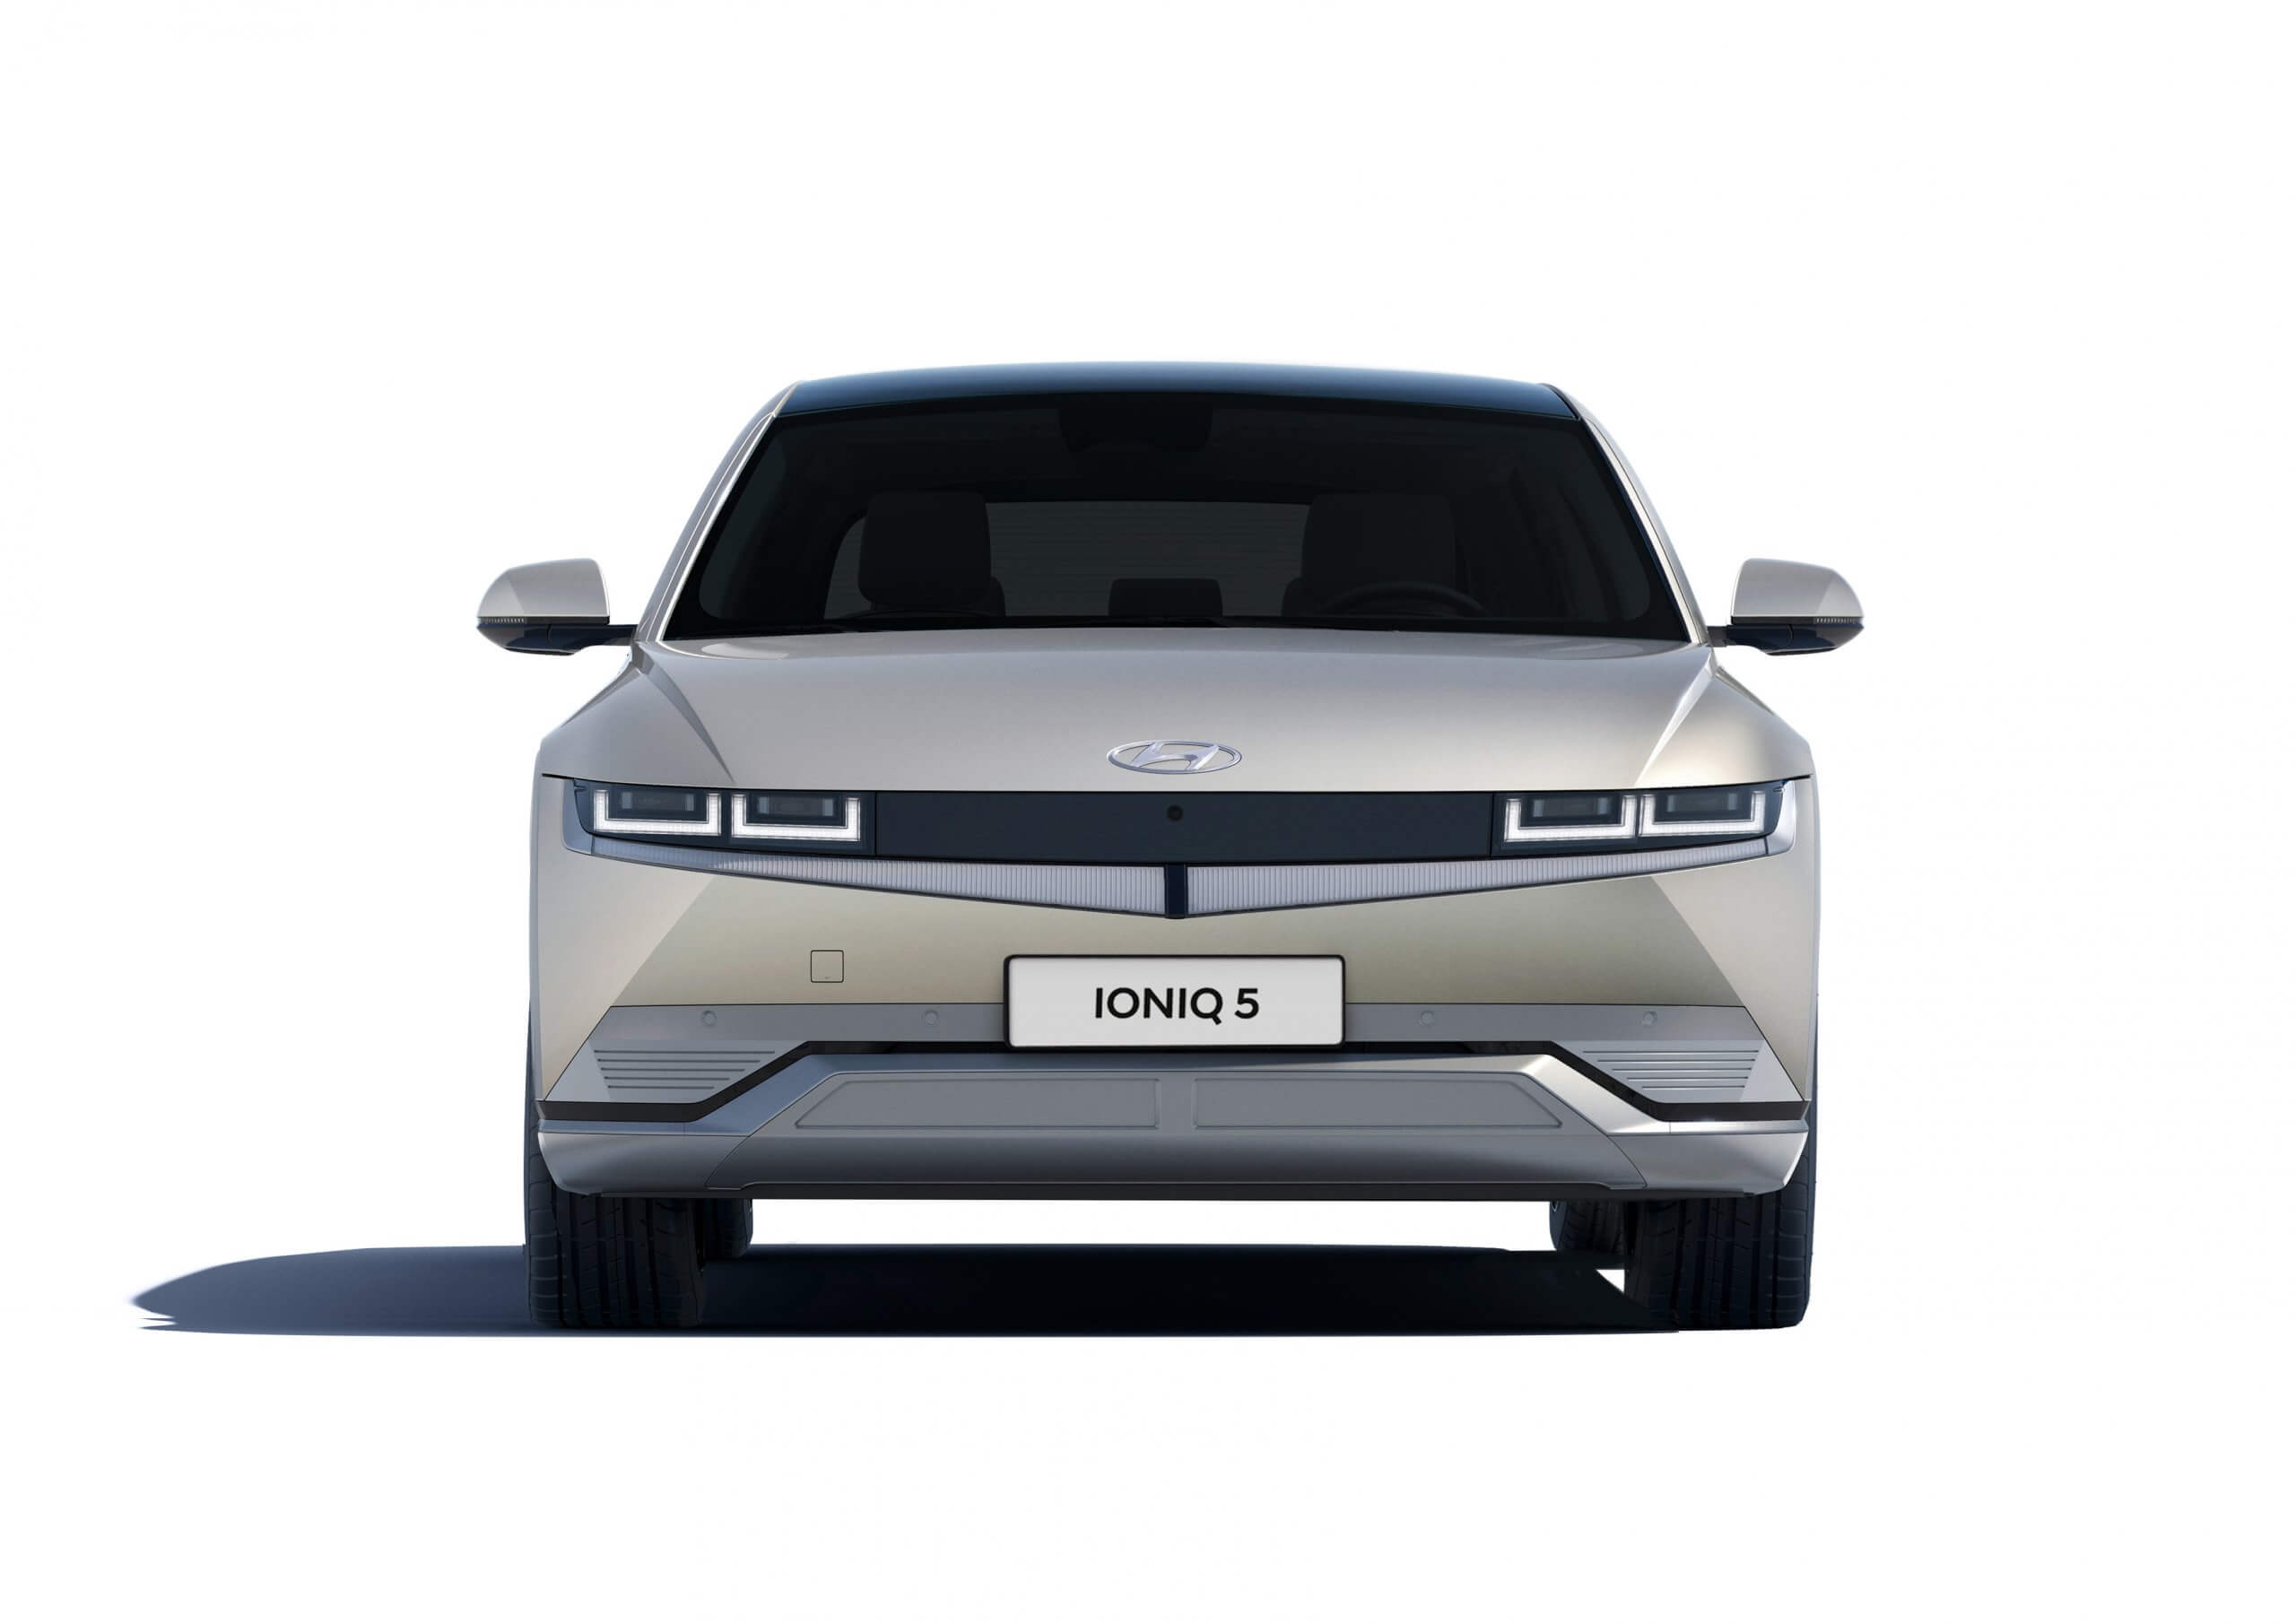 https://www.autohaus-ranaldi.de/wp-content/uploads/2021/02/Hyundai-IONIQ-5-2-scaled.jpg